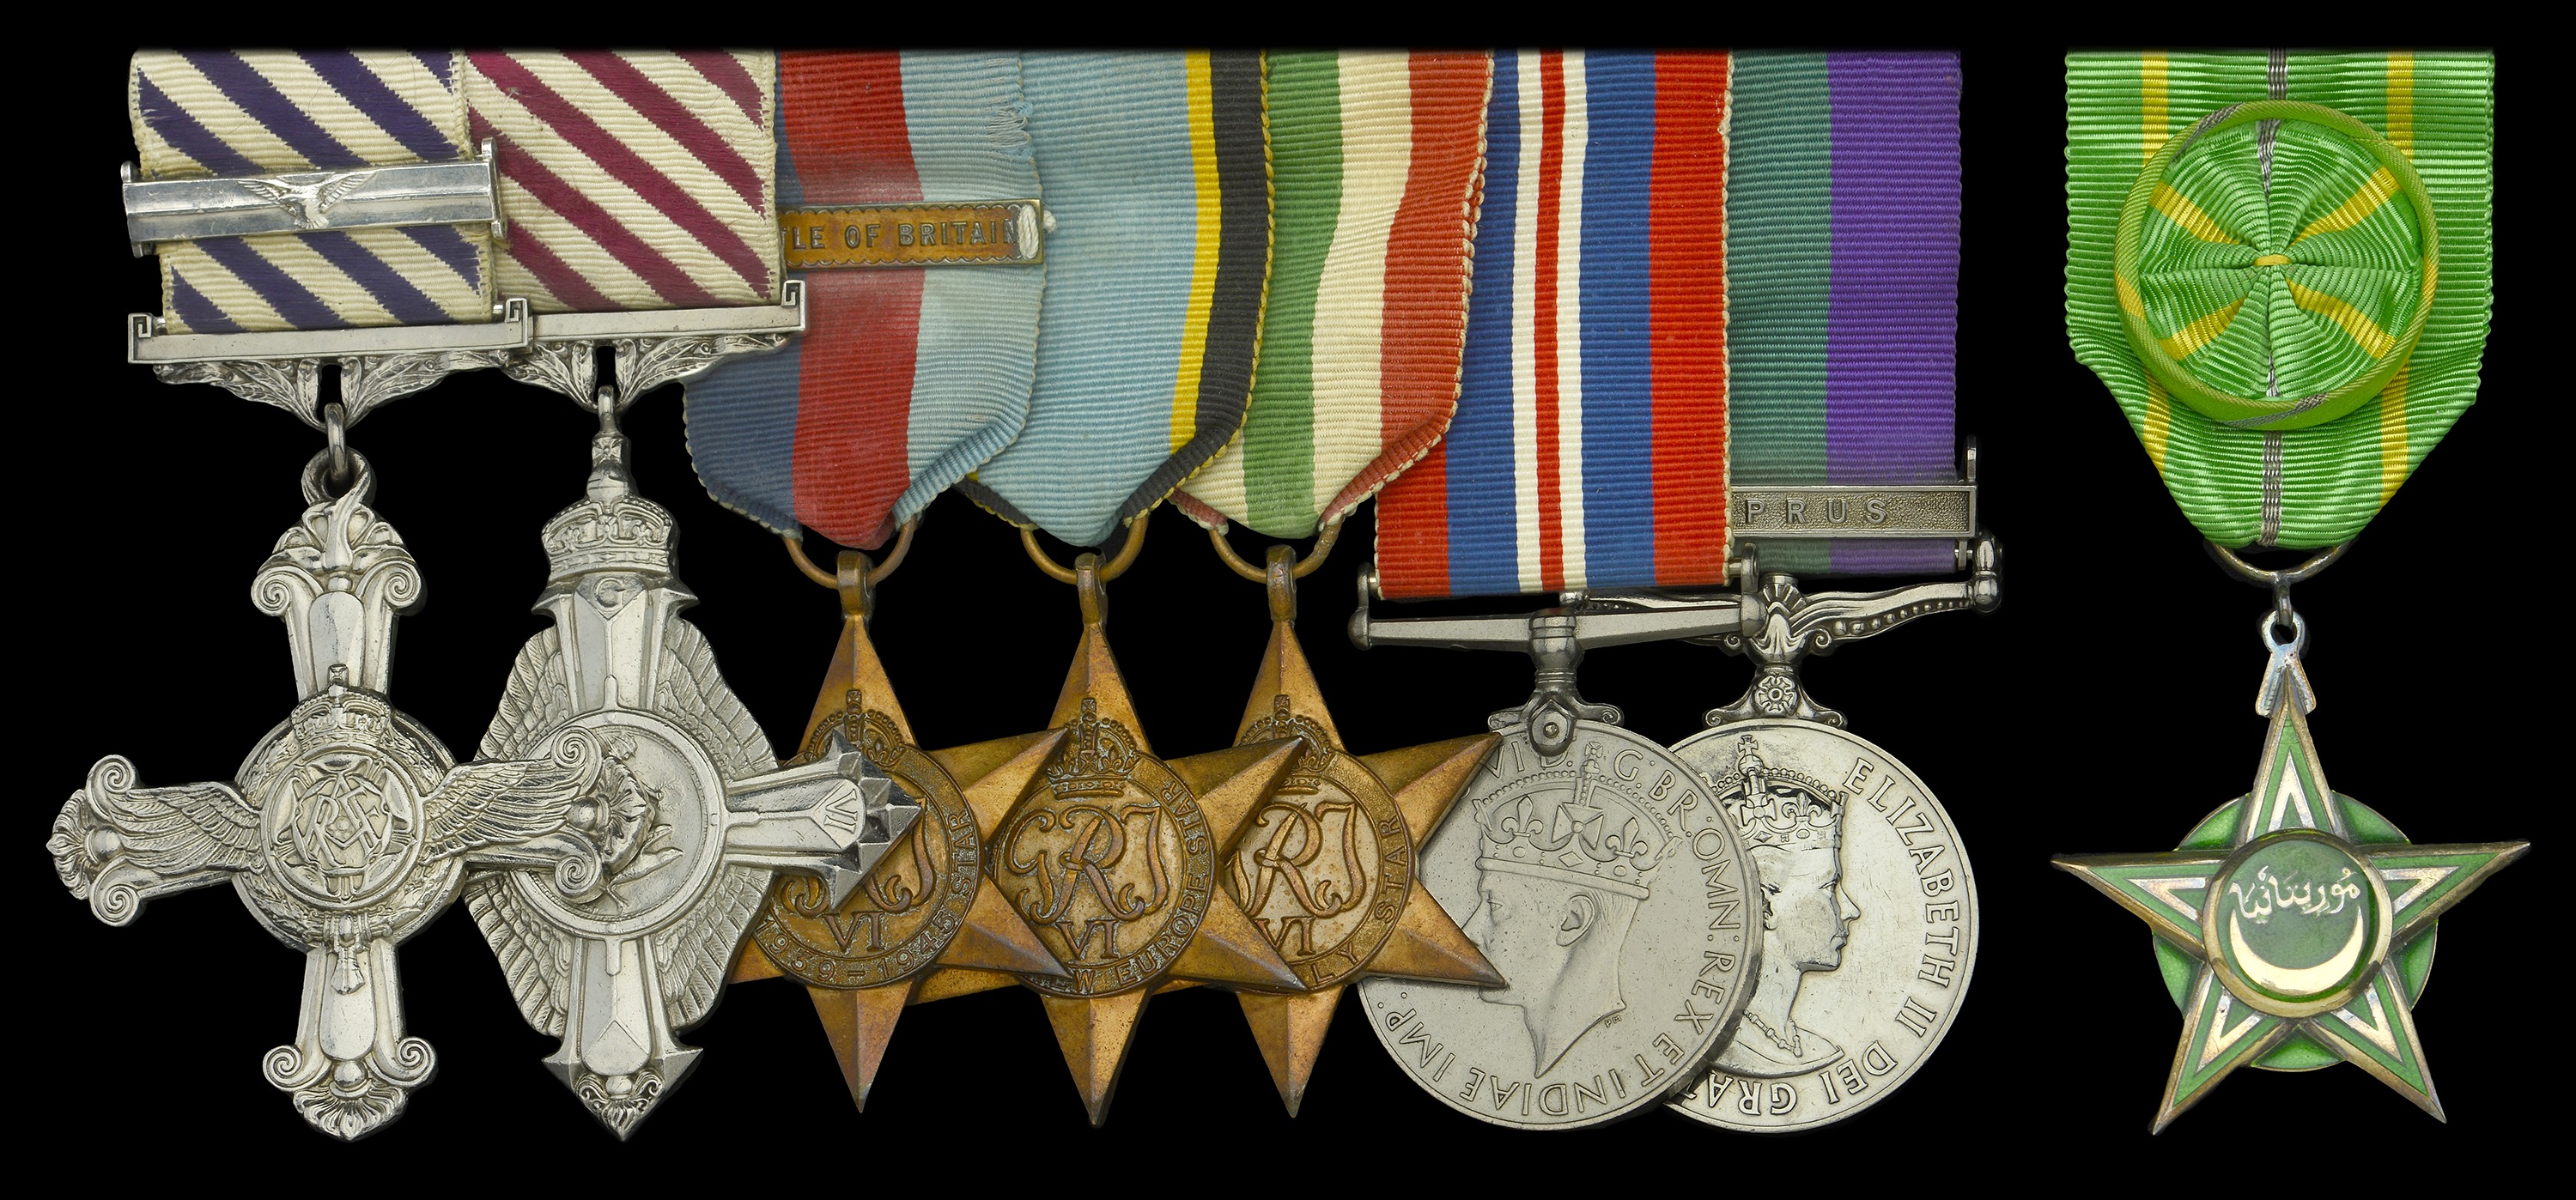 Wing Commander Peter Lawrence Parrott medals